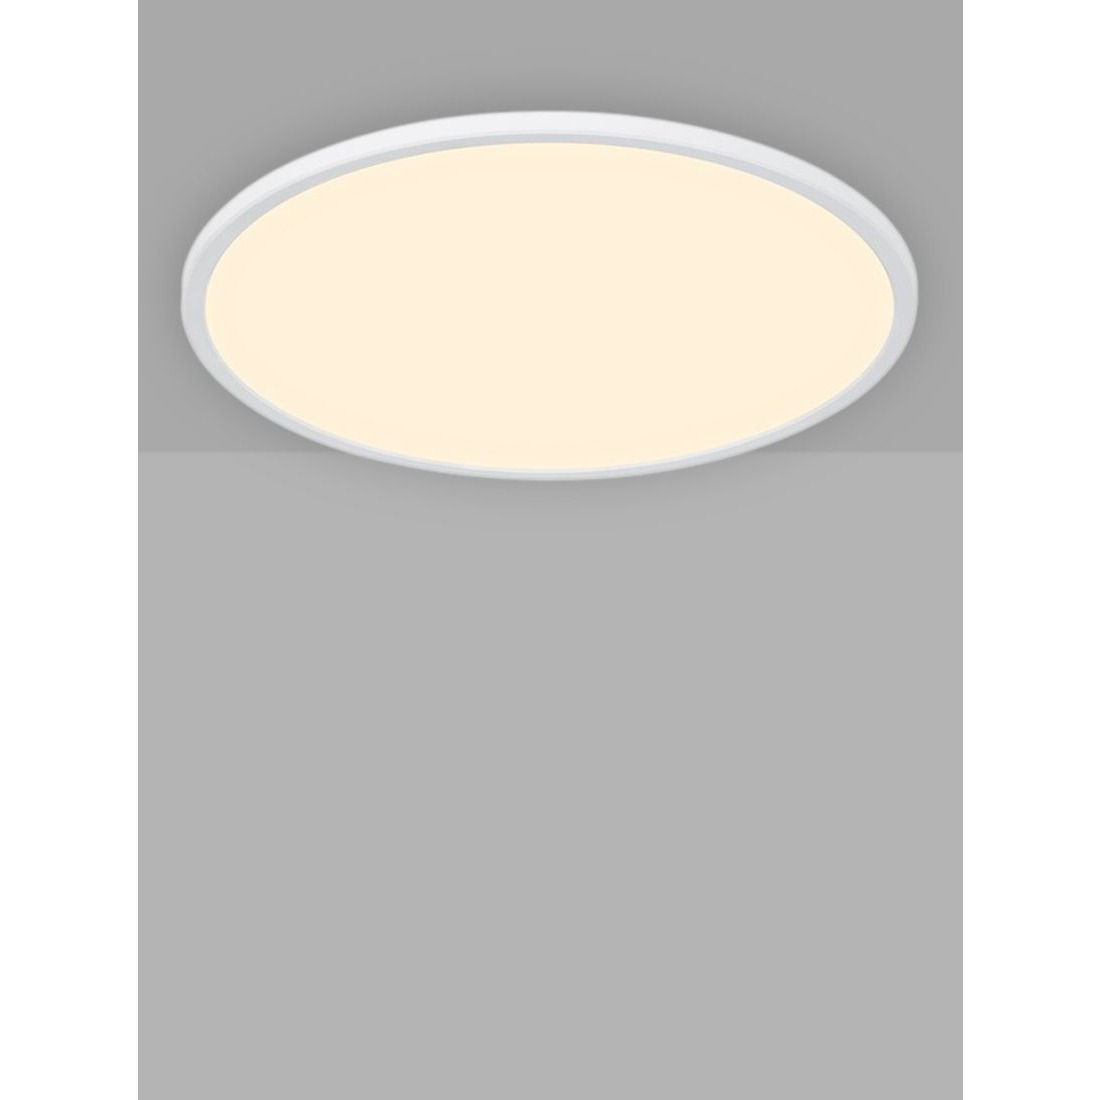 Nordlux Oja 42 Smart Ceiling Light, White - image 1